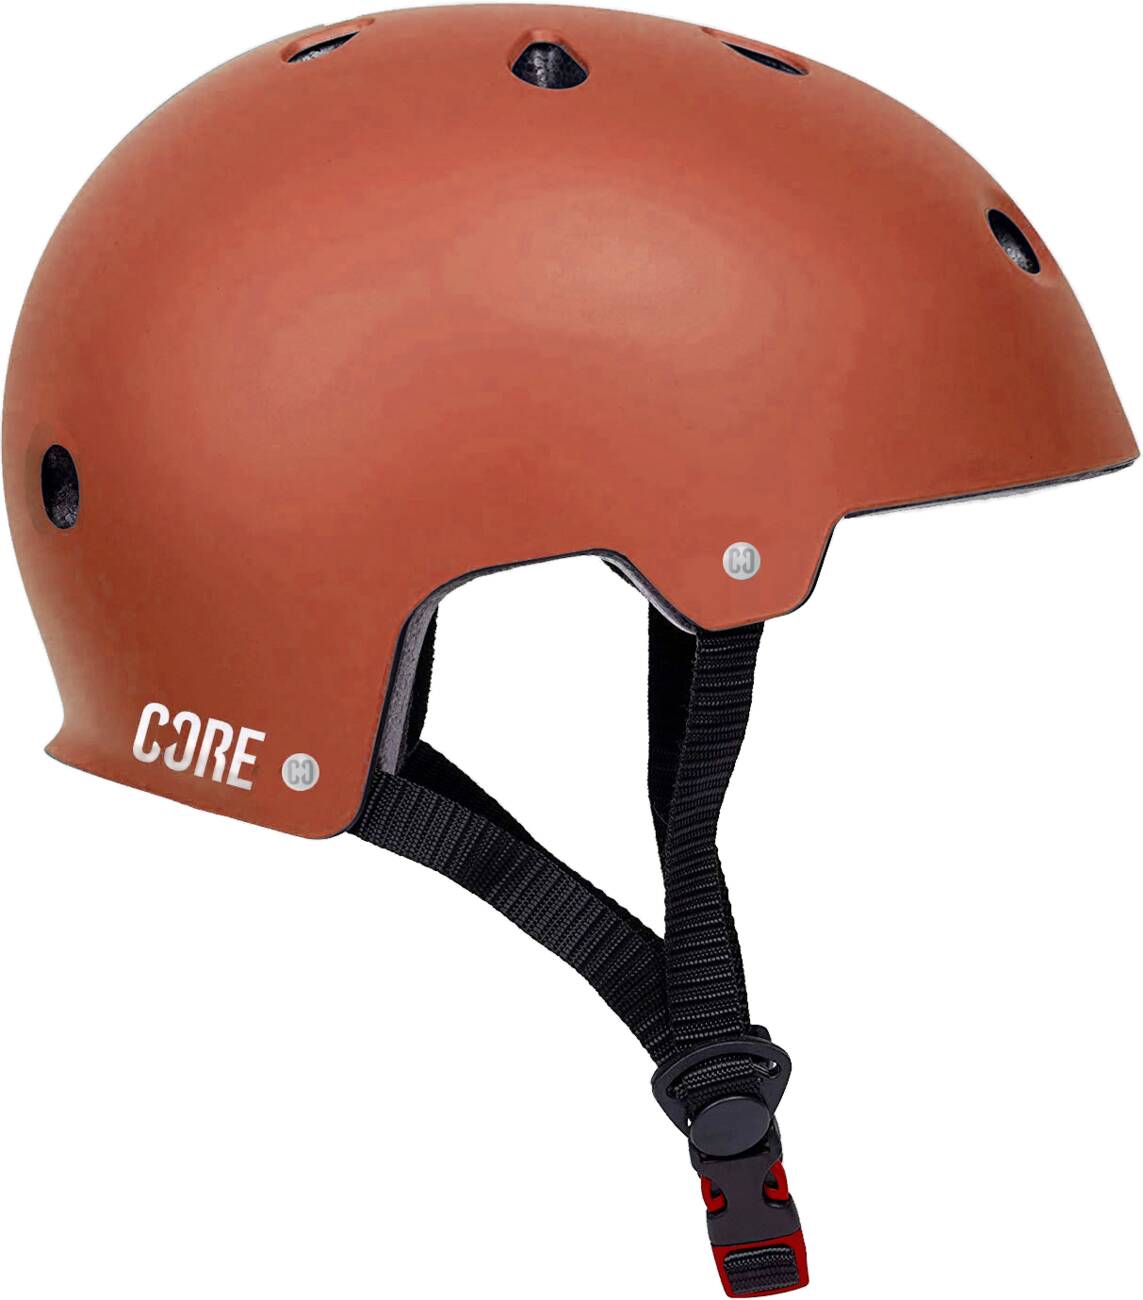 CORE Action Sports Helmet - Peach Salmon